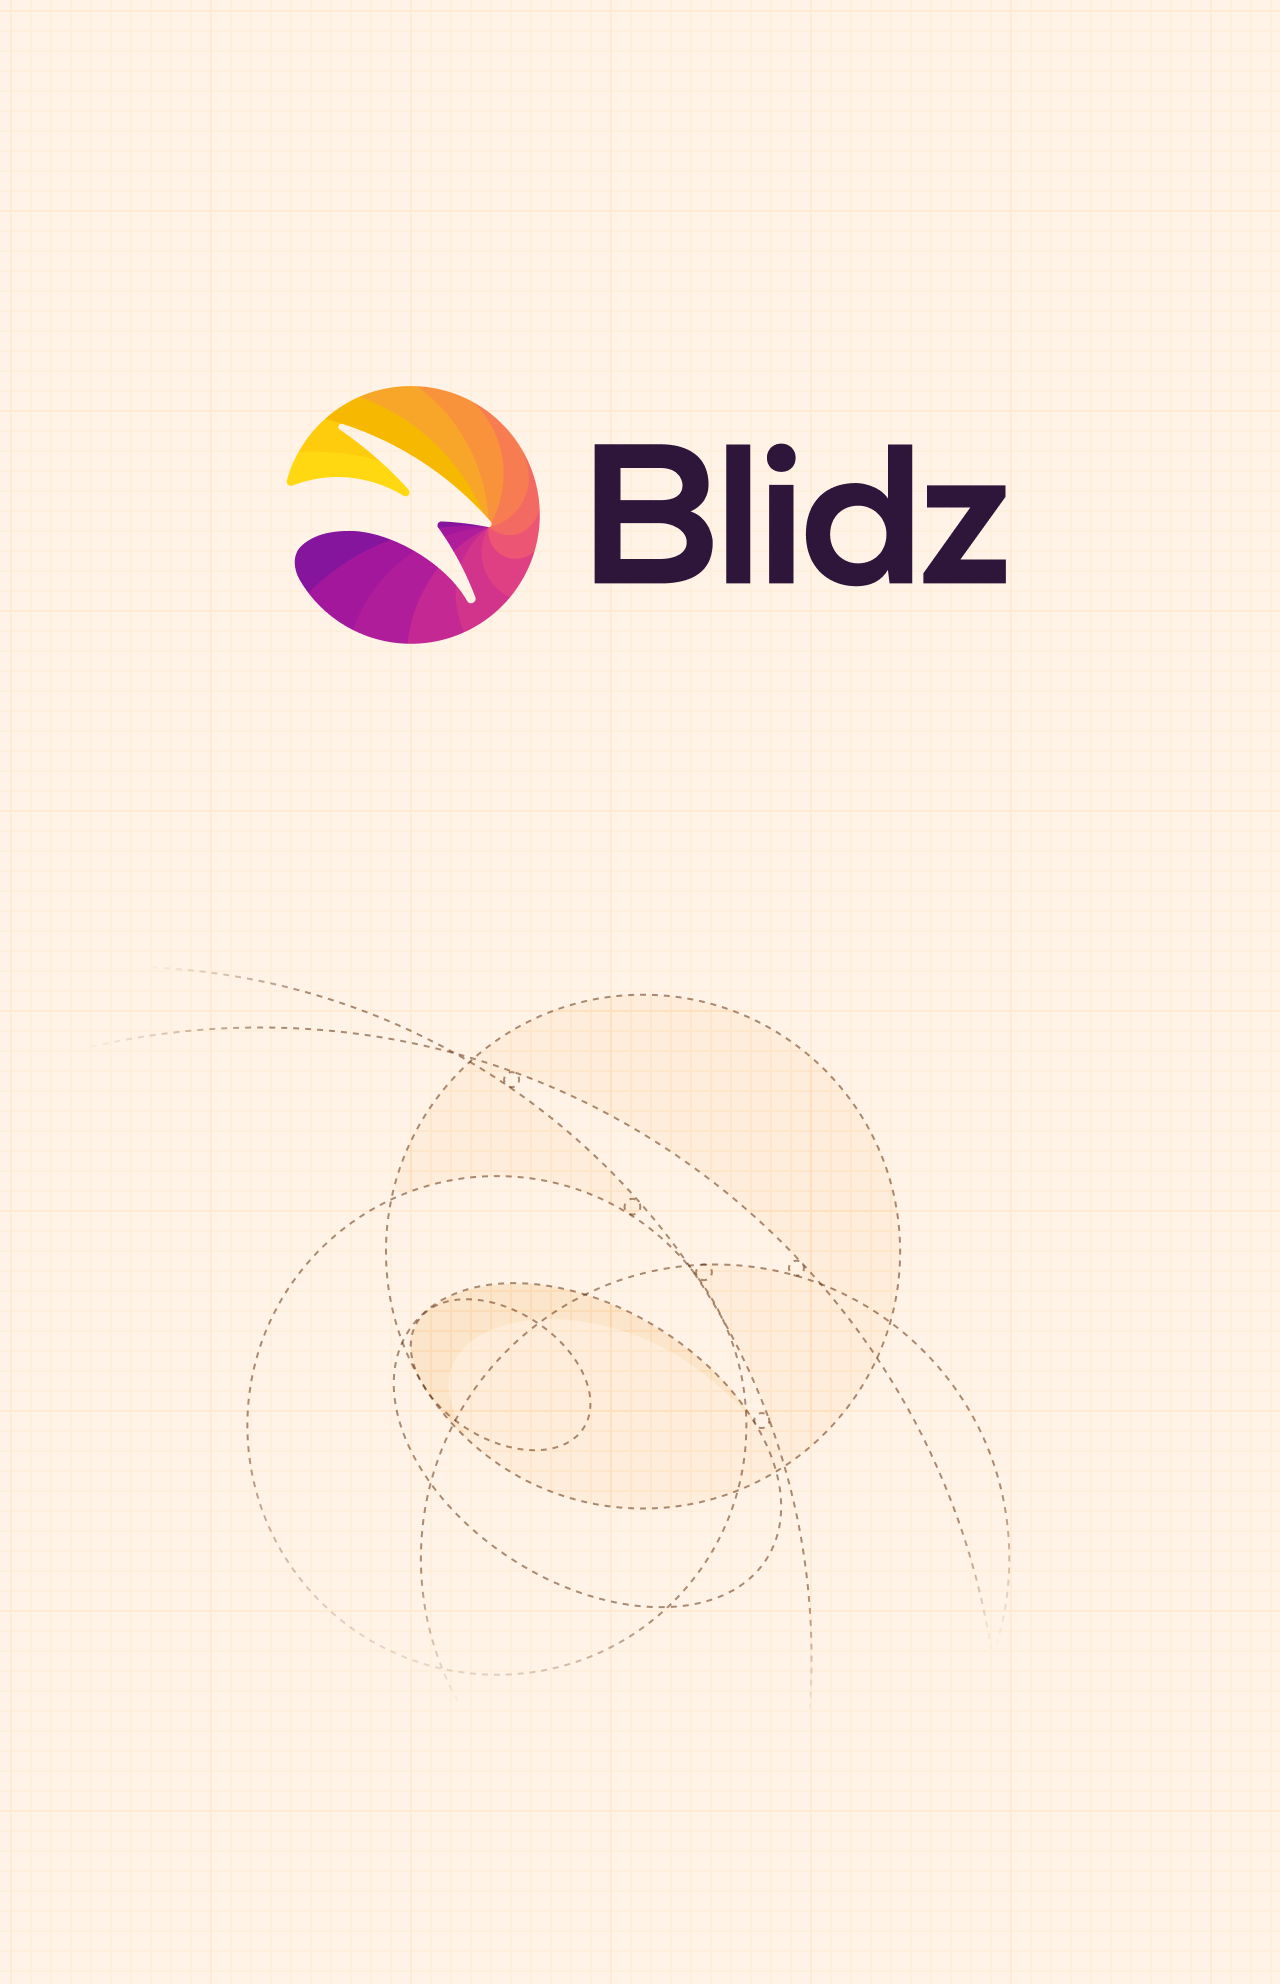 Blidz logo construction